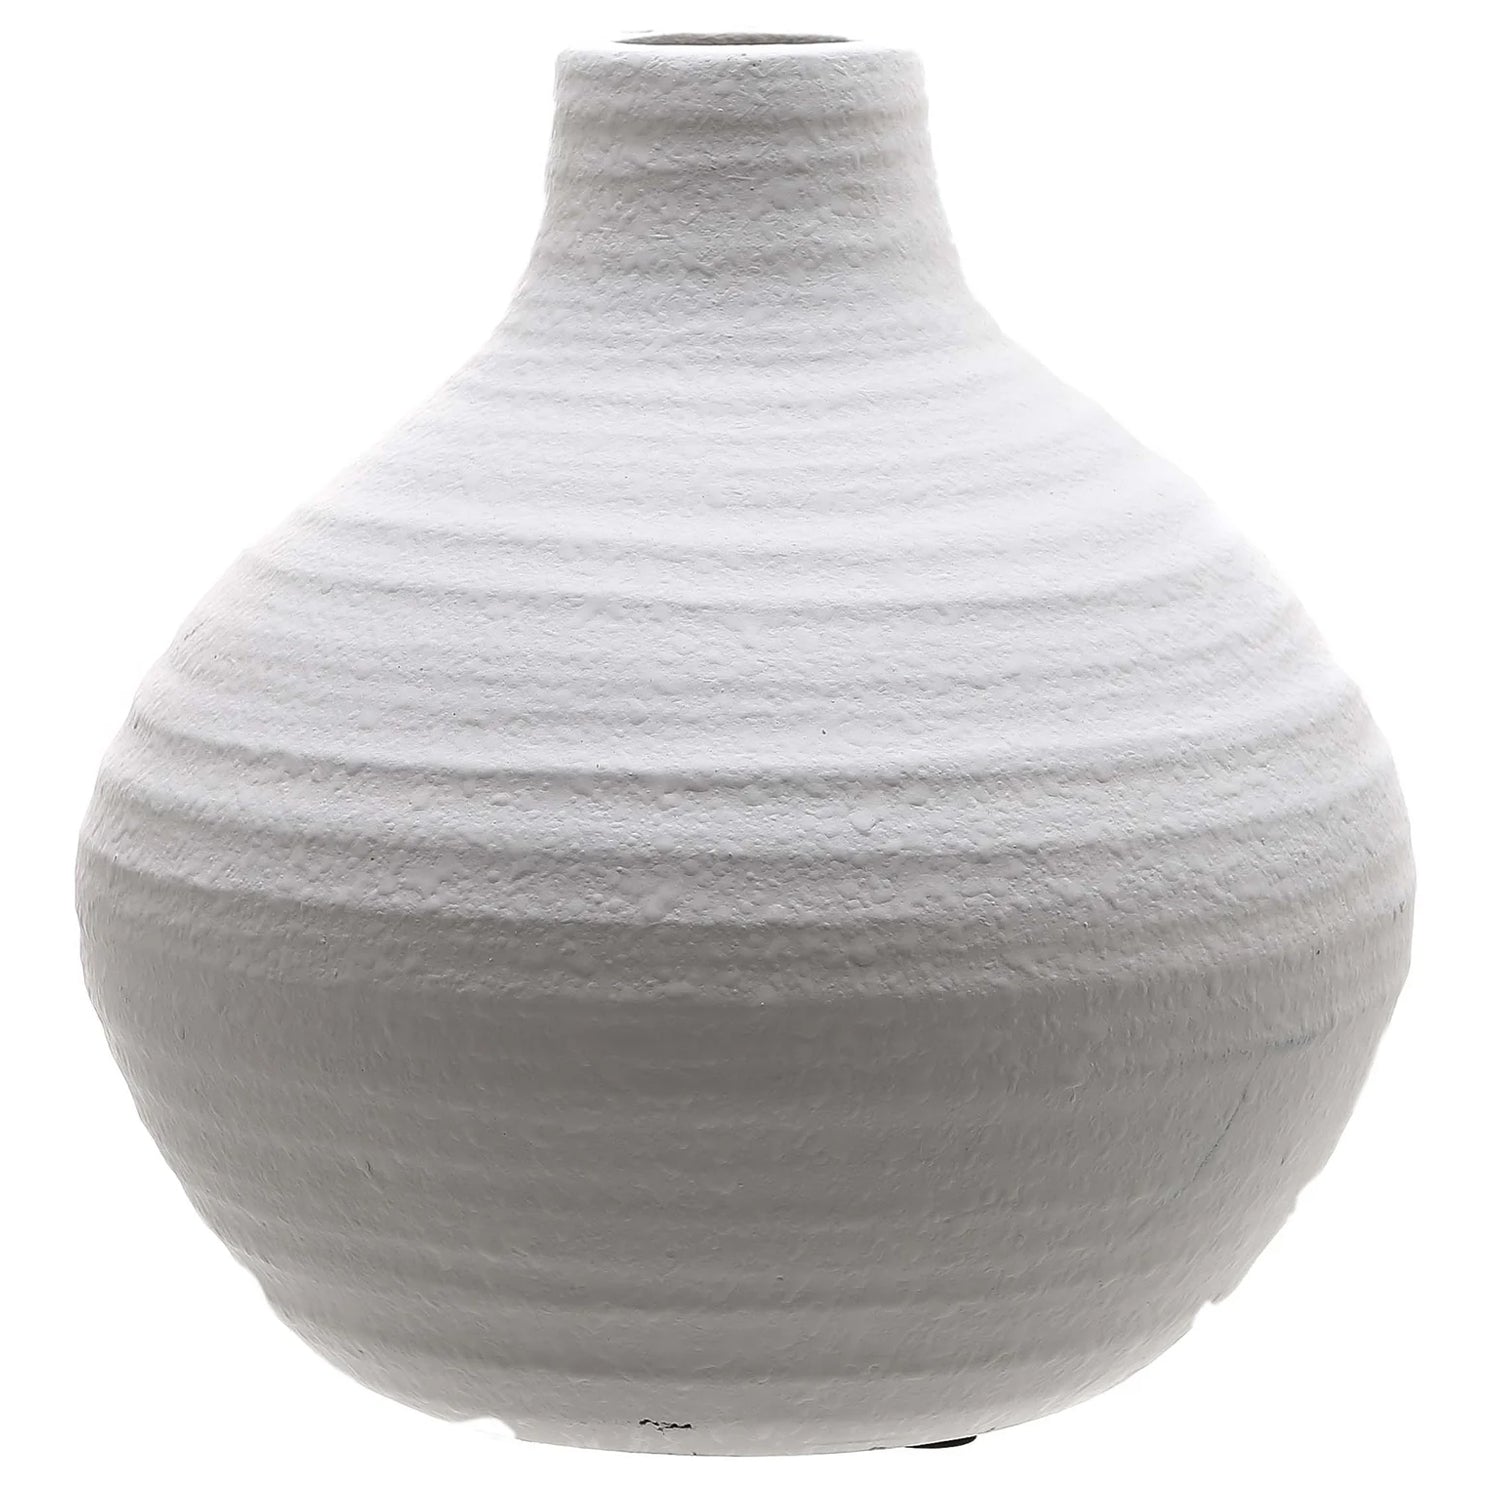 Amphora Vase by Hill Interiors